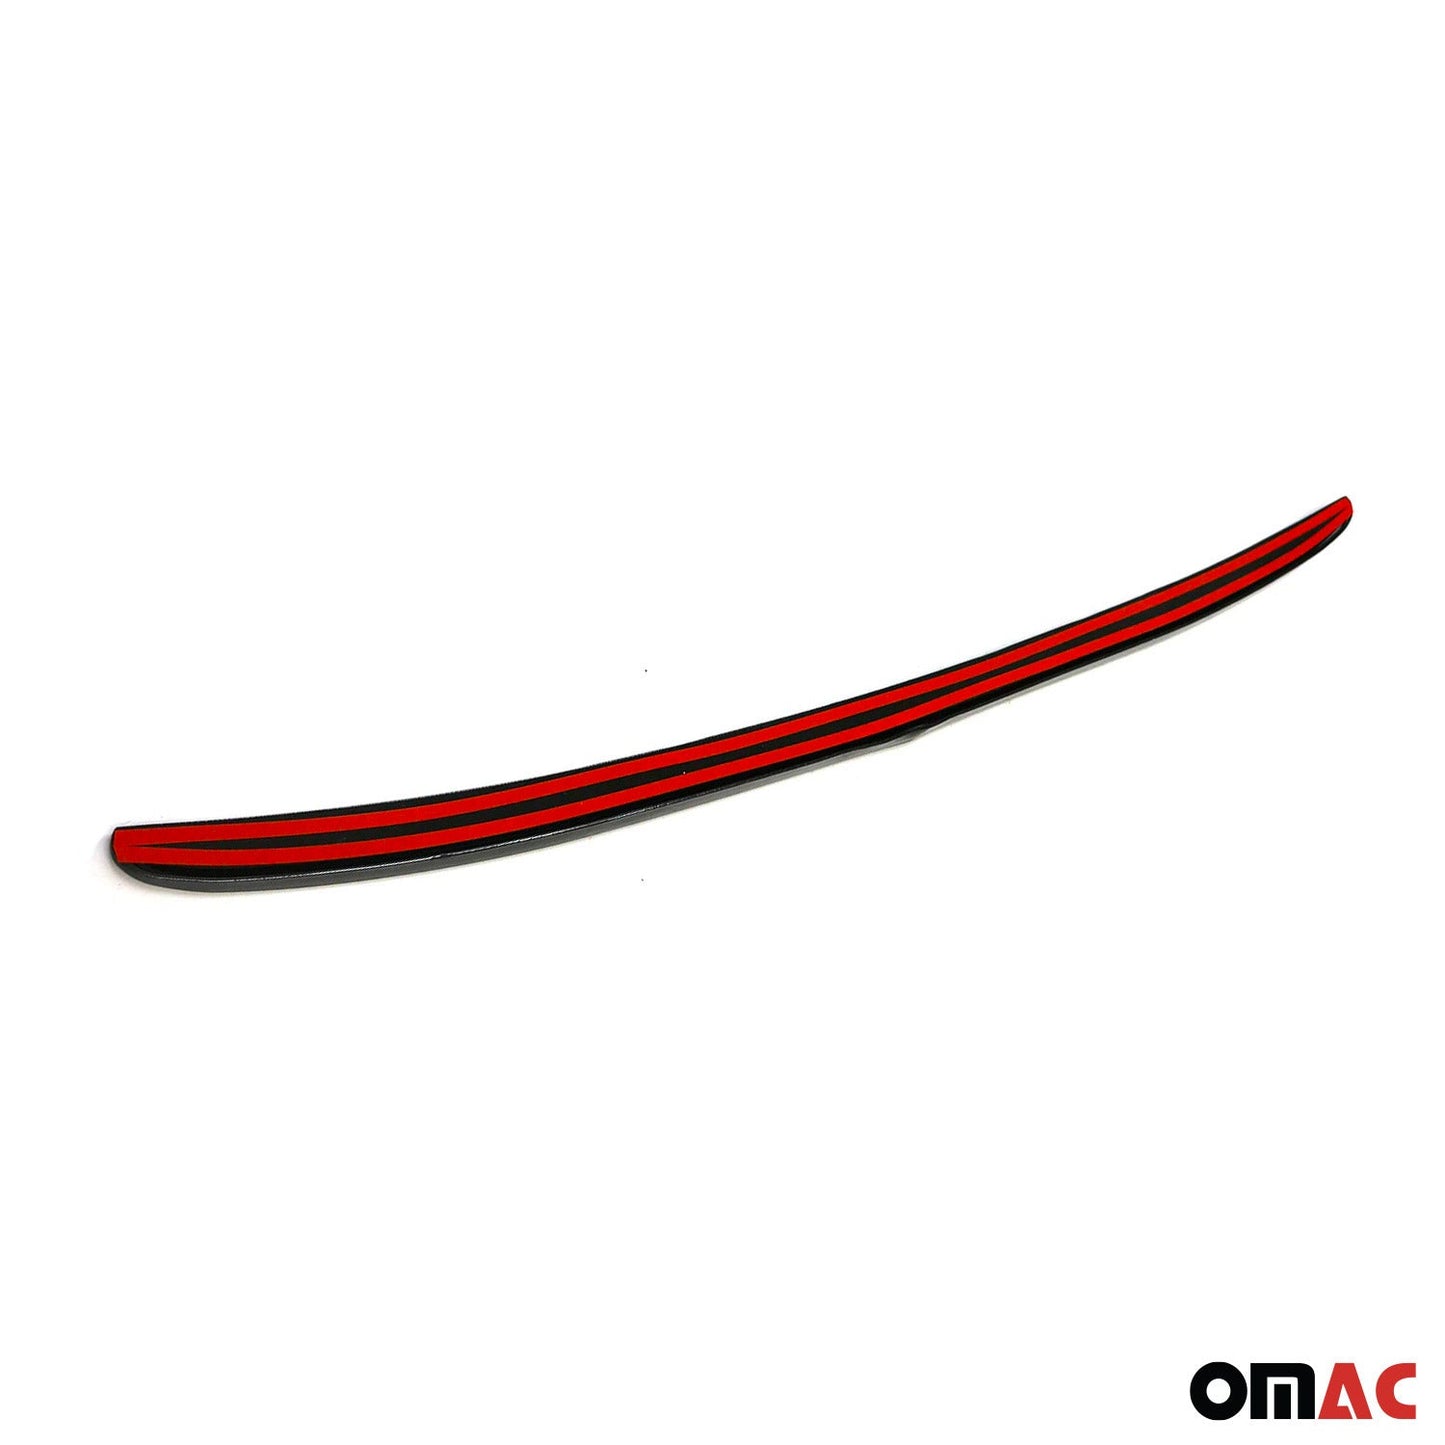 OMAC Rear Trunk Spoiler Wing for Hyundai Accent 2001-2005 Black U015387